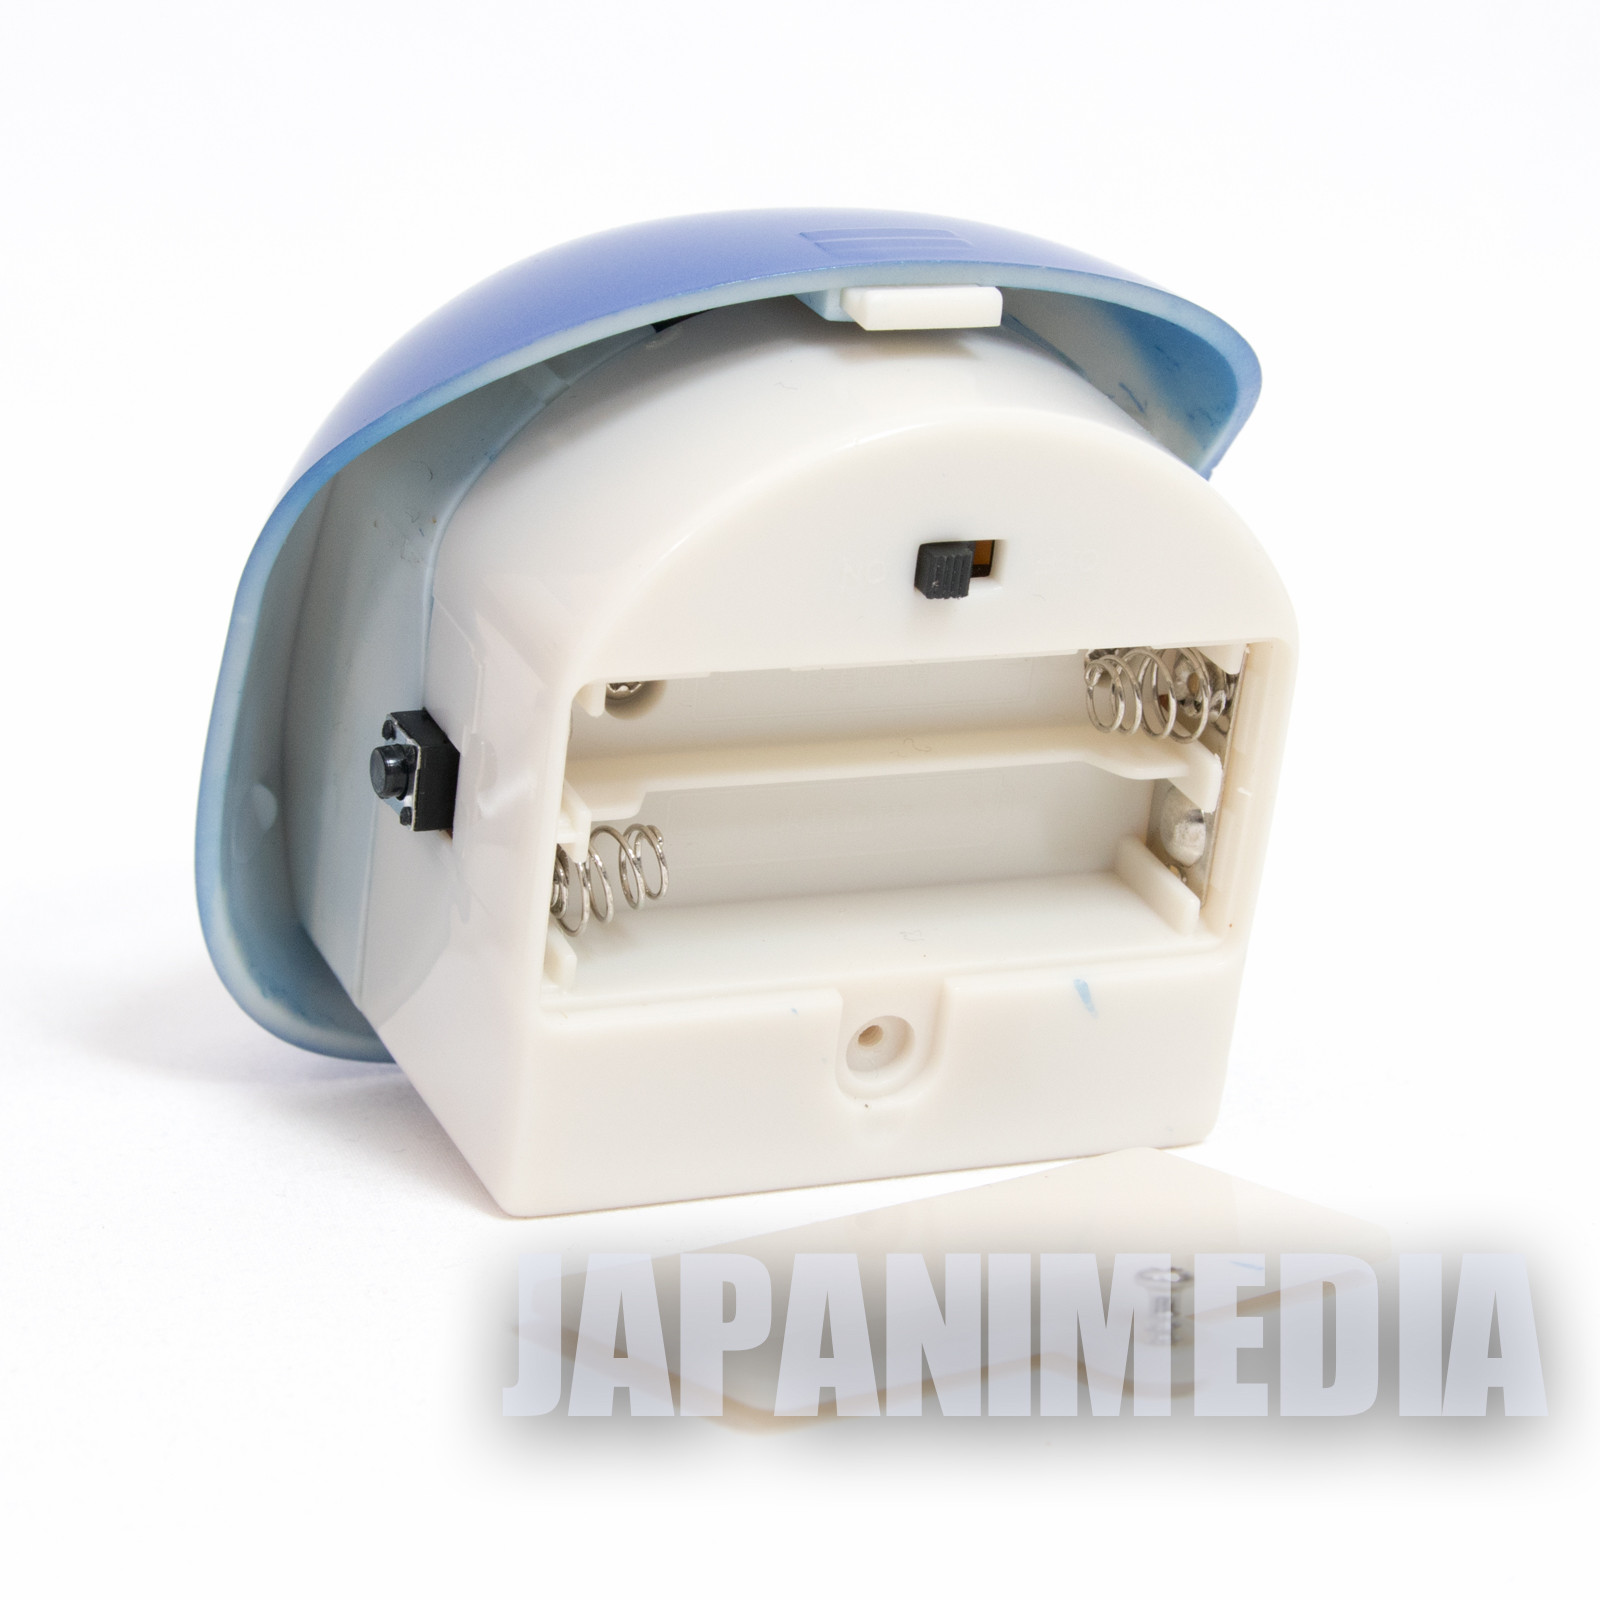 Ghost in the Shell Tachikoma Figure Alarm Clock JAPAN ANIME